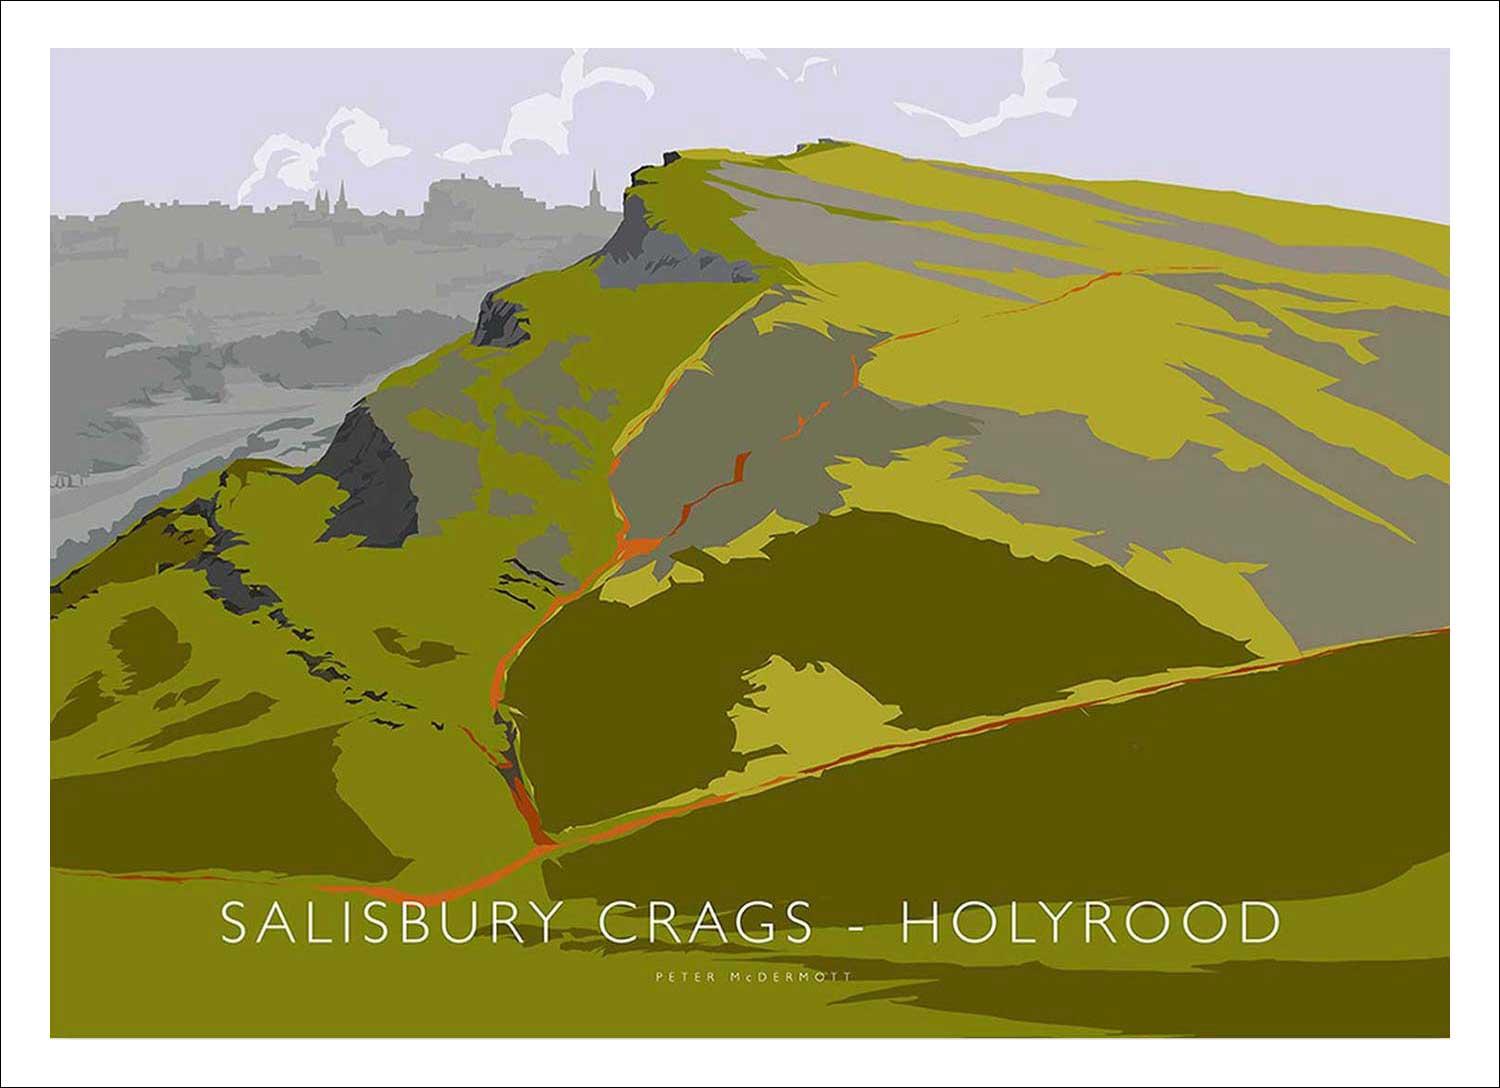 Salisbury Crags, Holyrood Art Print from an original illustration by artist Peter McDermott